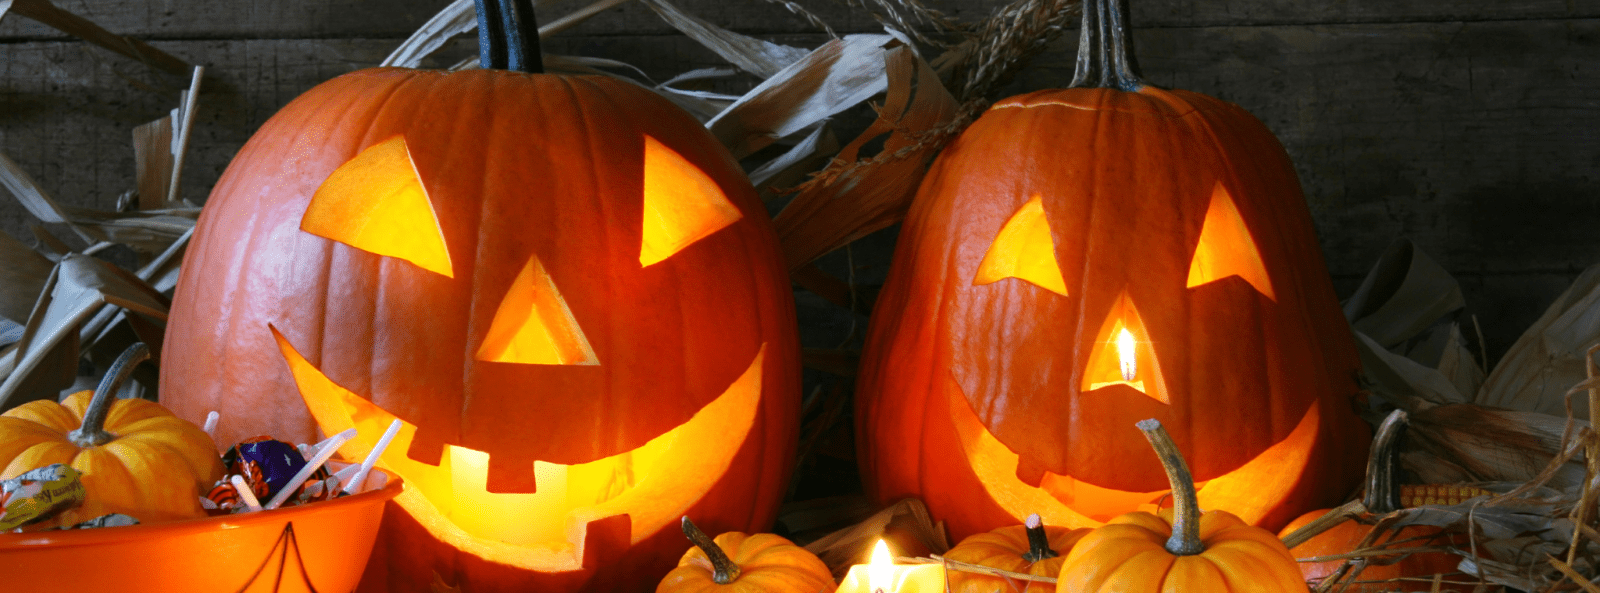 Pumpkin carving web banner